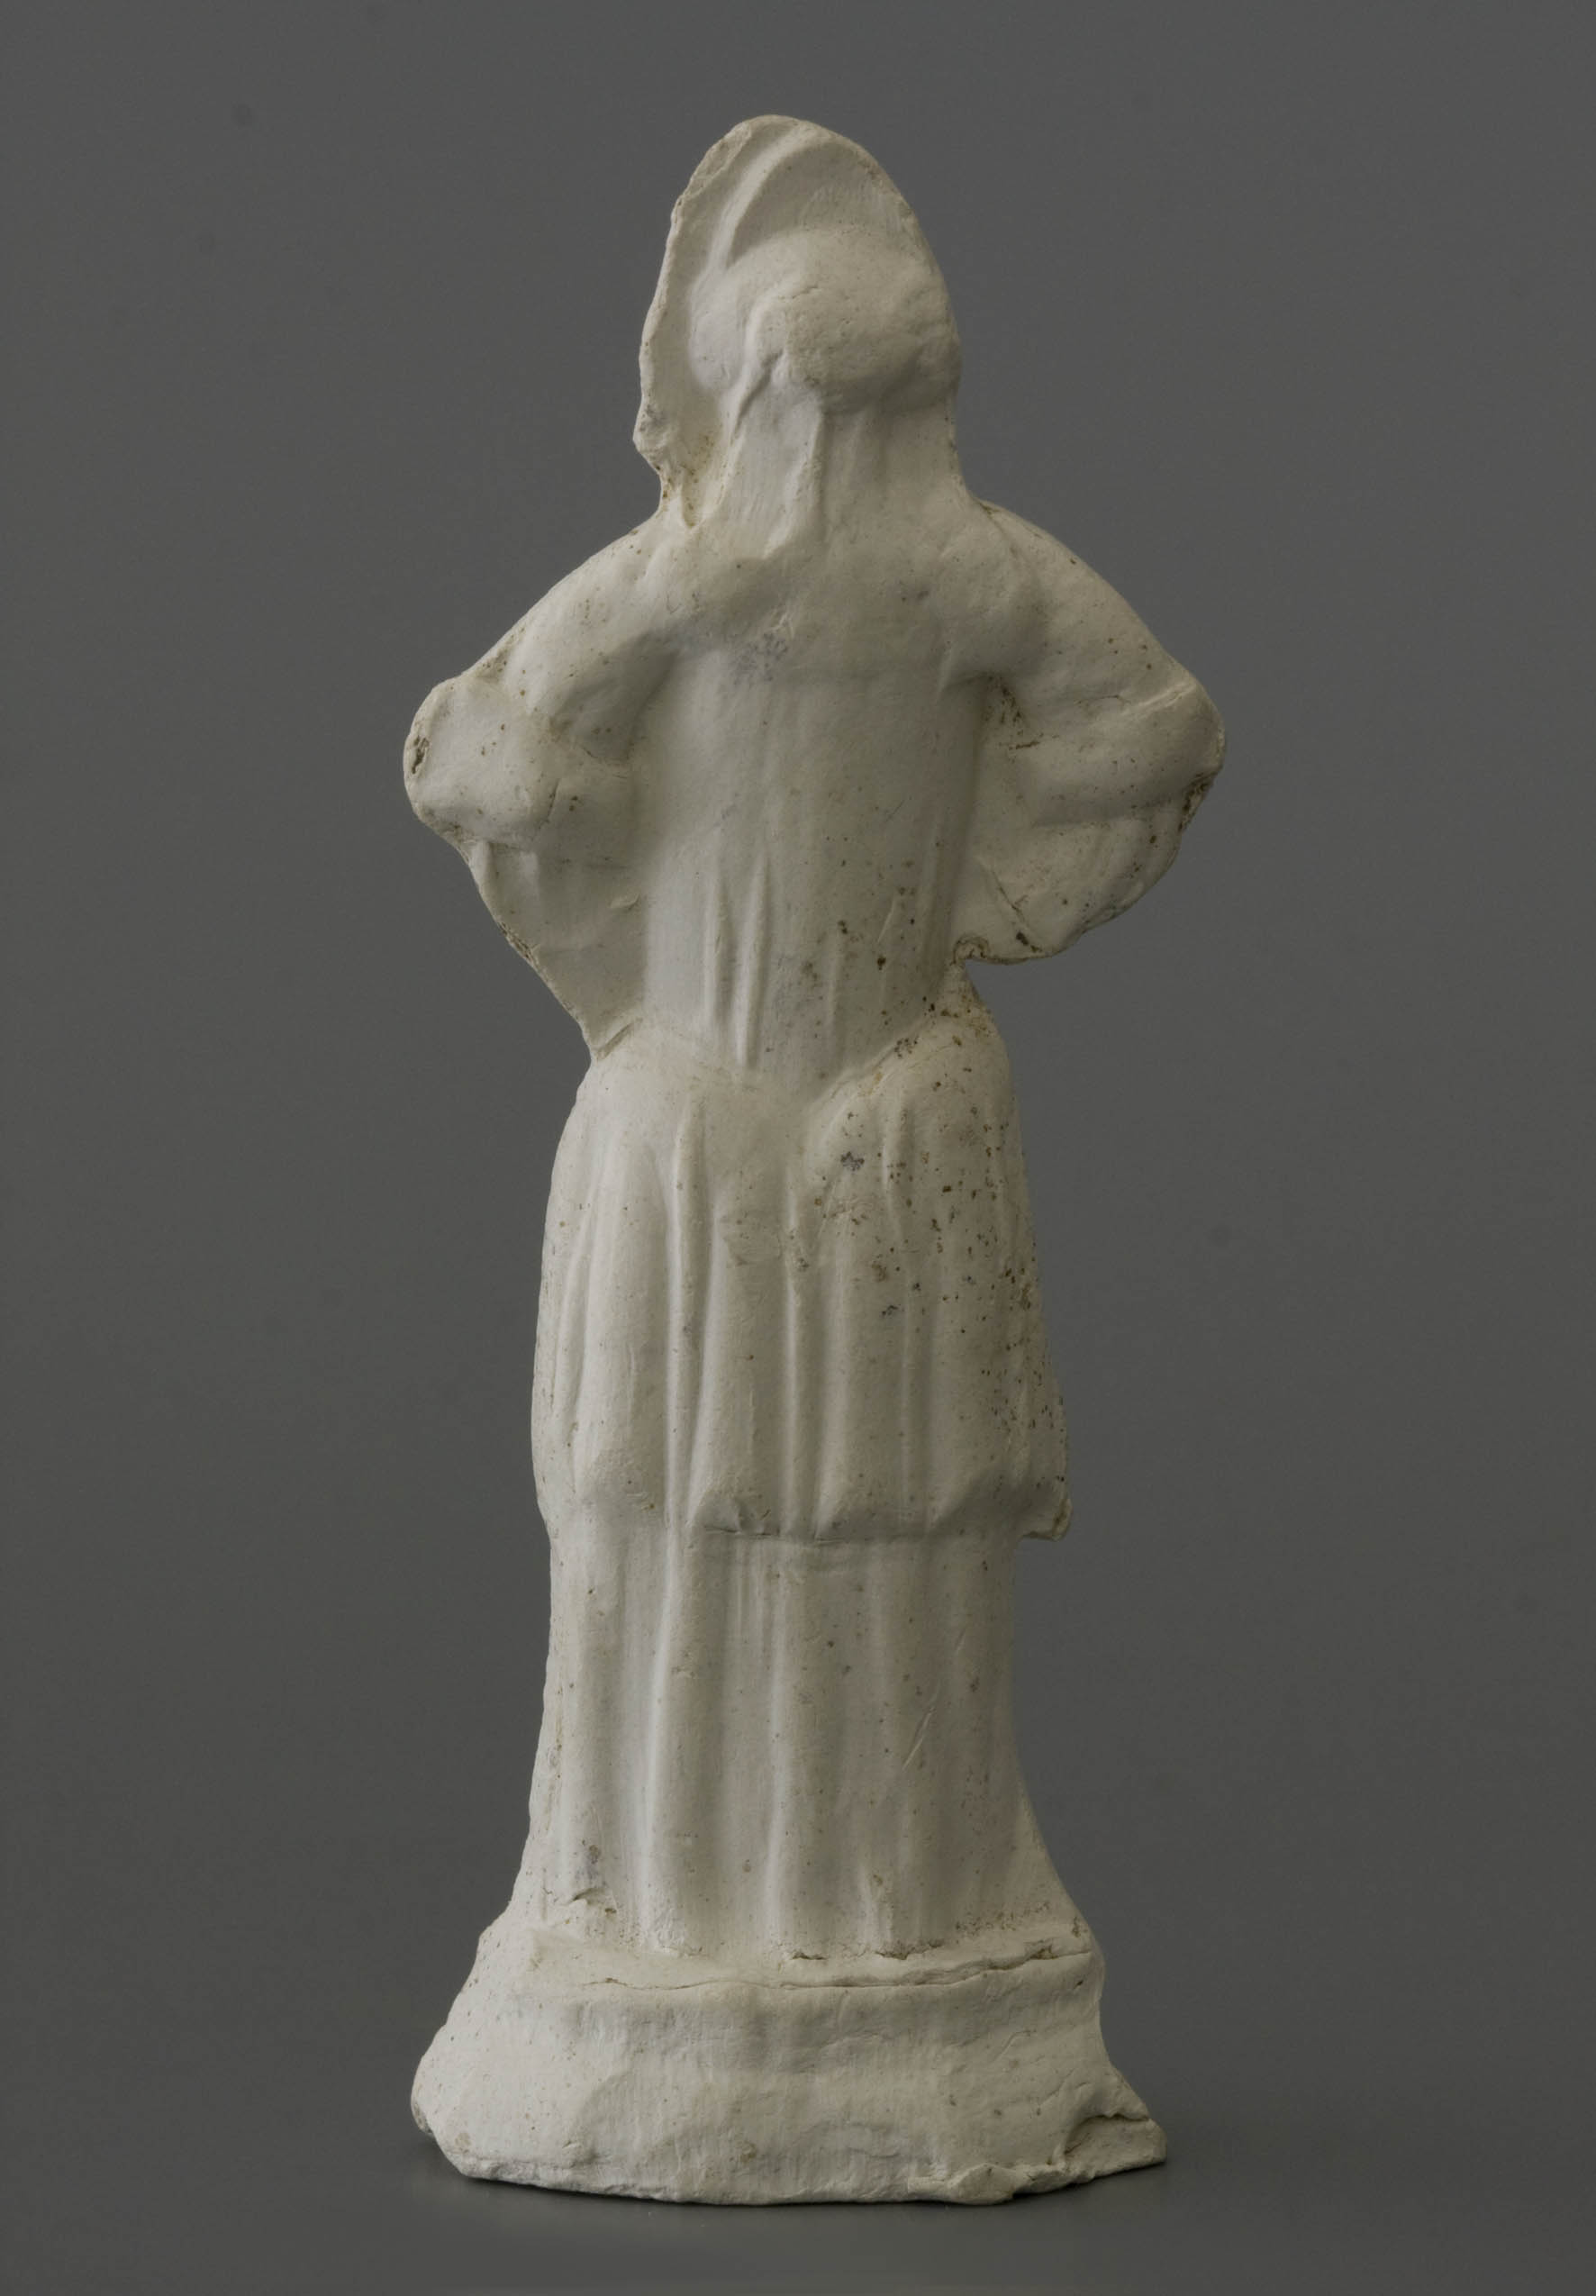 09-16.842-pipeclay-figurine-woman-2